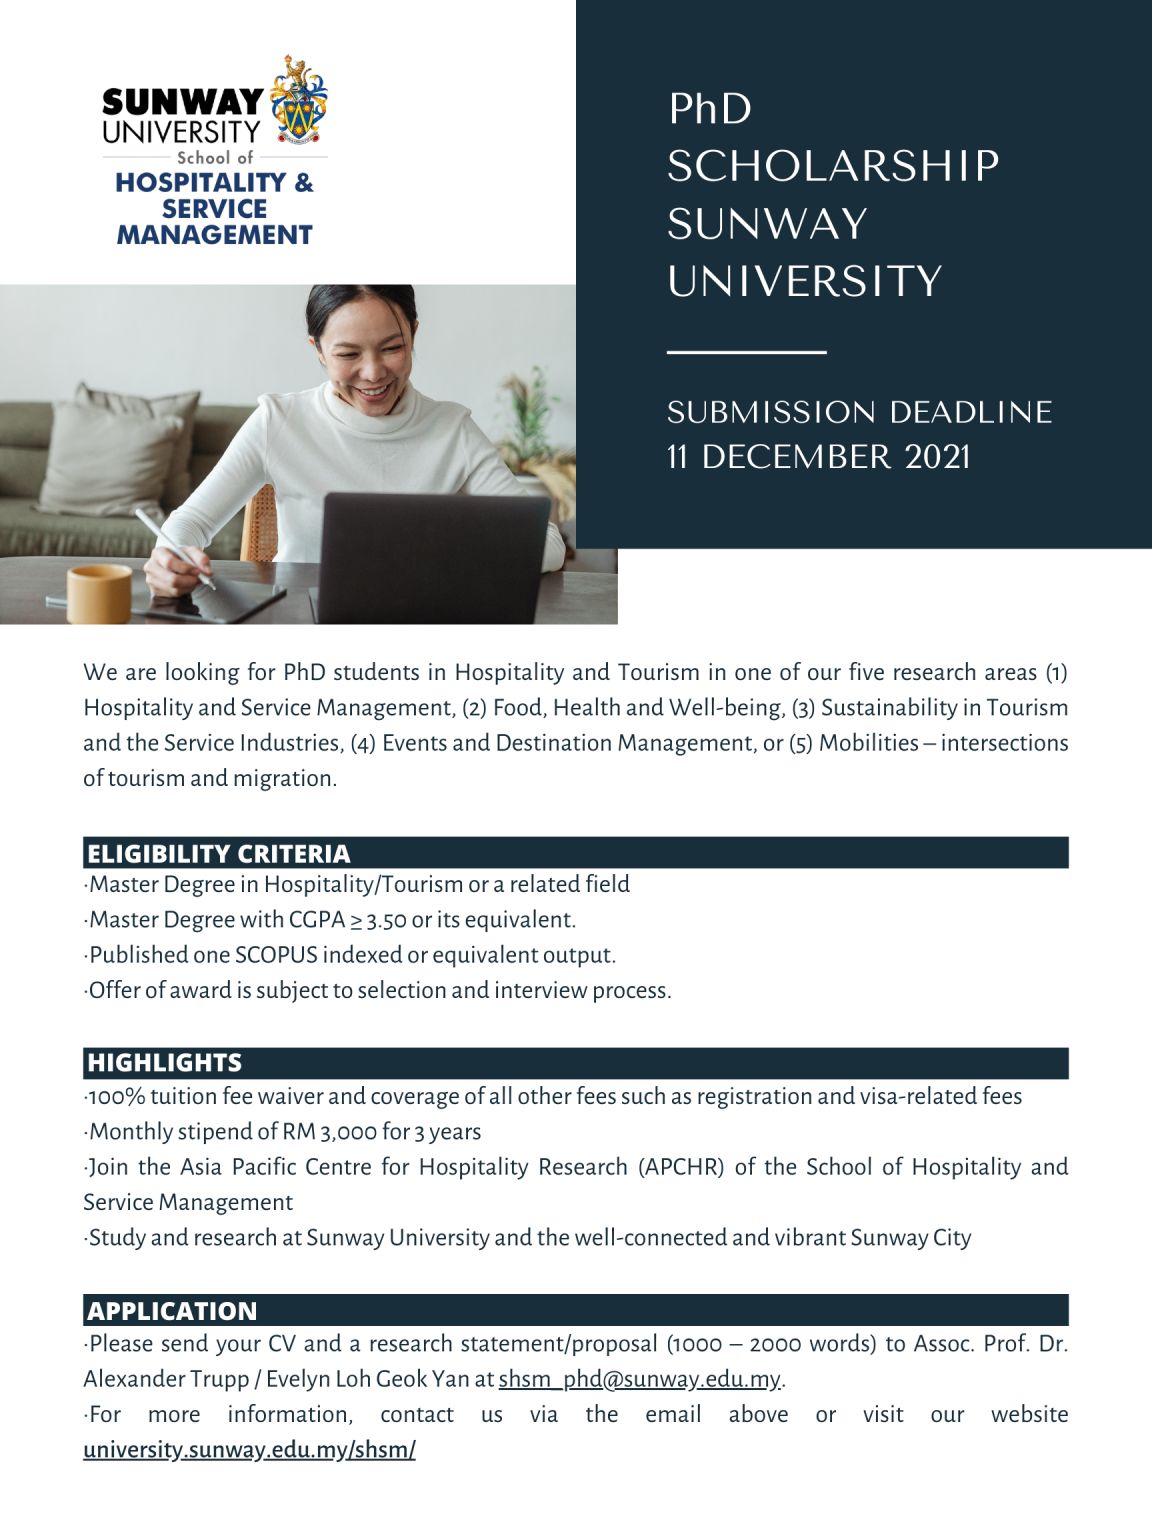 Sunway university fees 2021